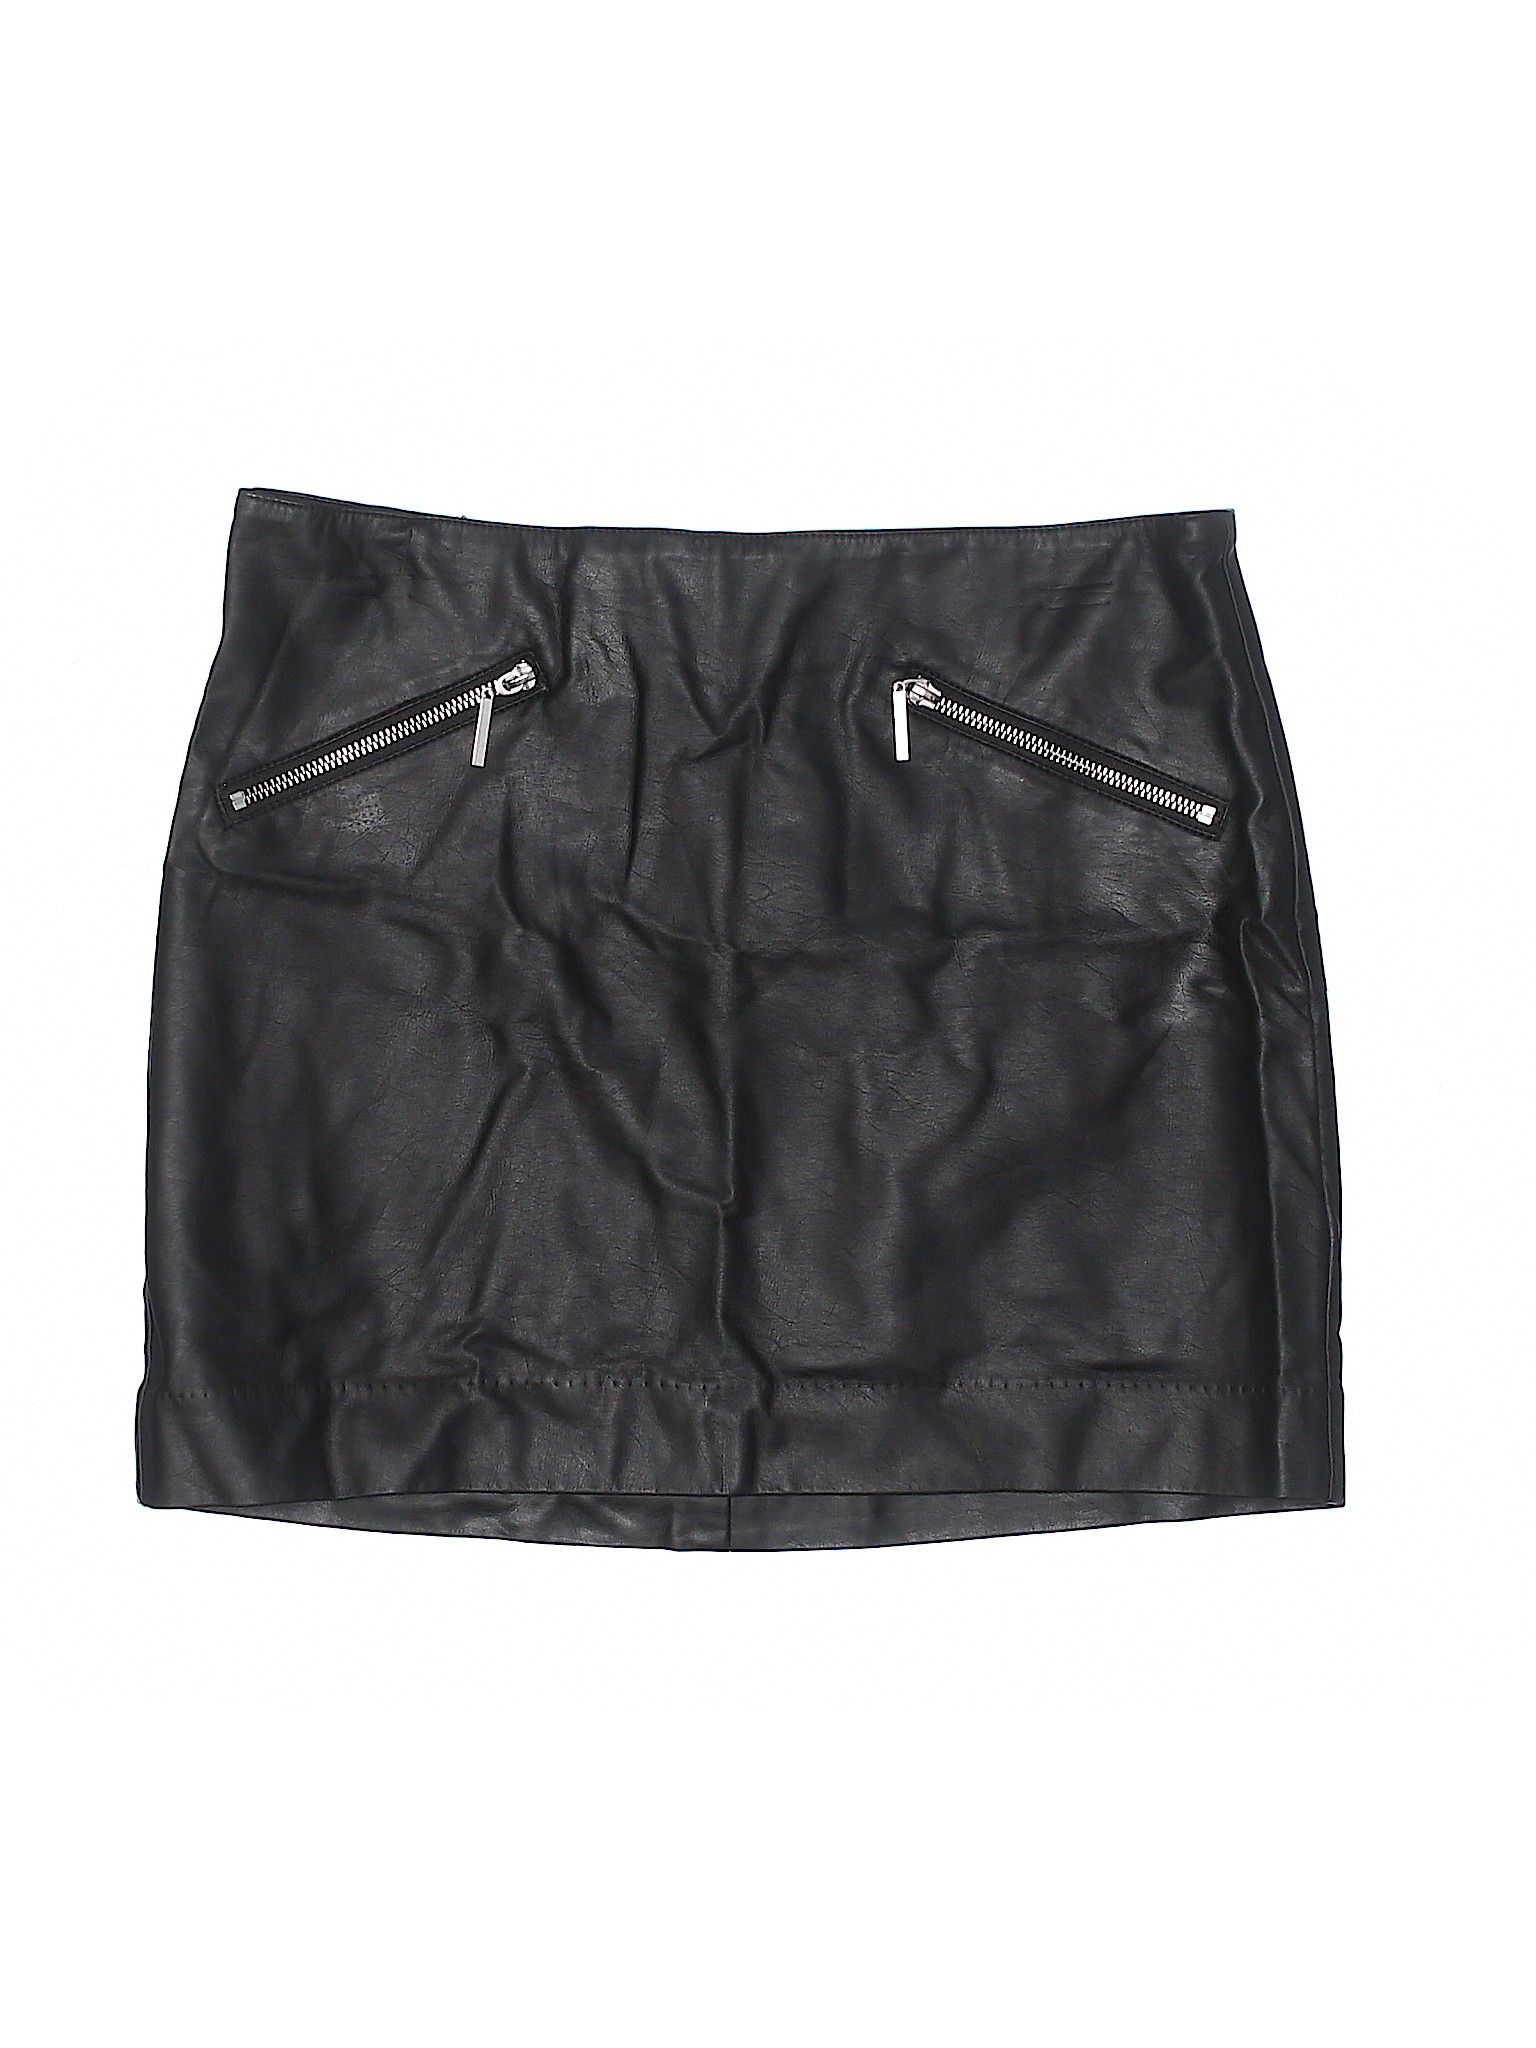 H&M Faux Leather Skirt Size 8: Black Women's Bottoms - 40796160 | thredUP